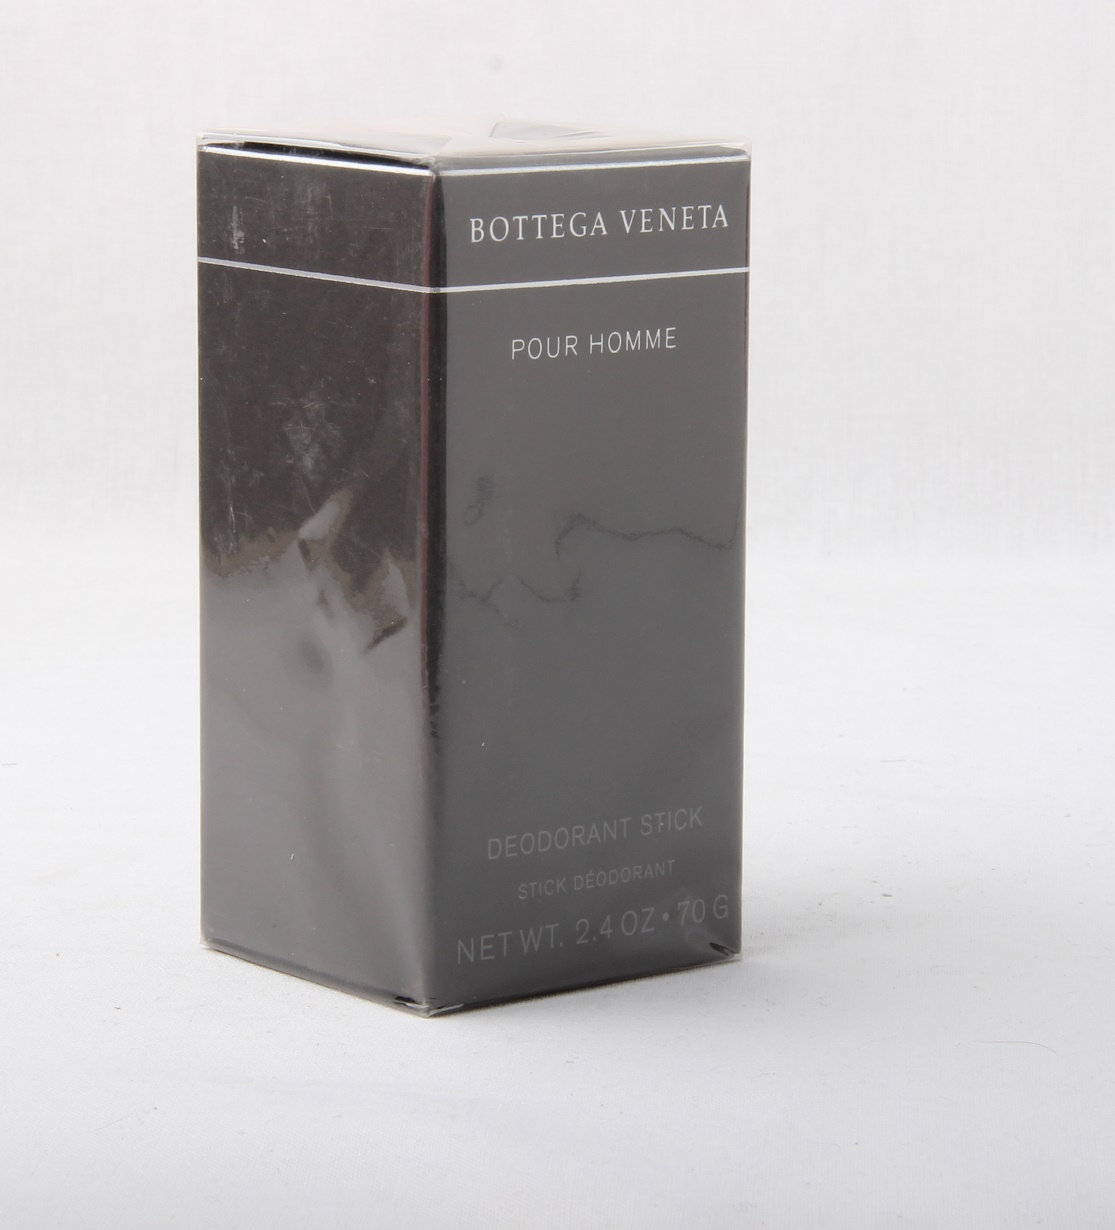 Bottega Veneta Pour Homme Deodorant Stick 70g